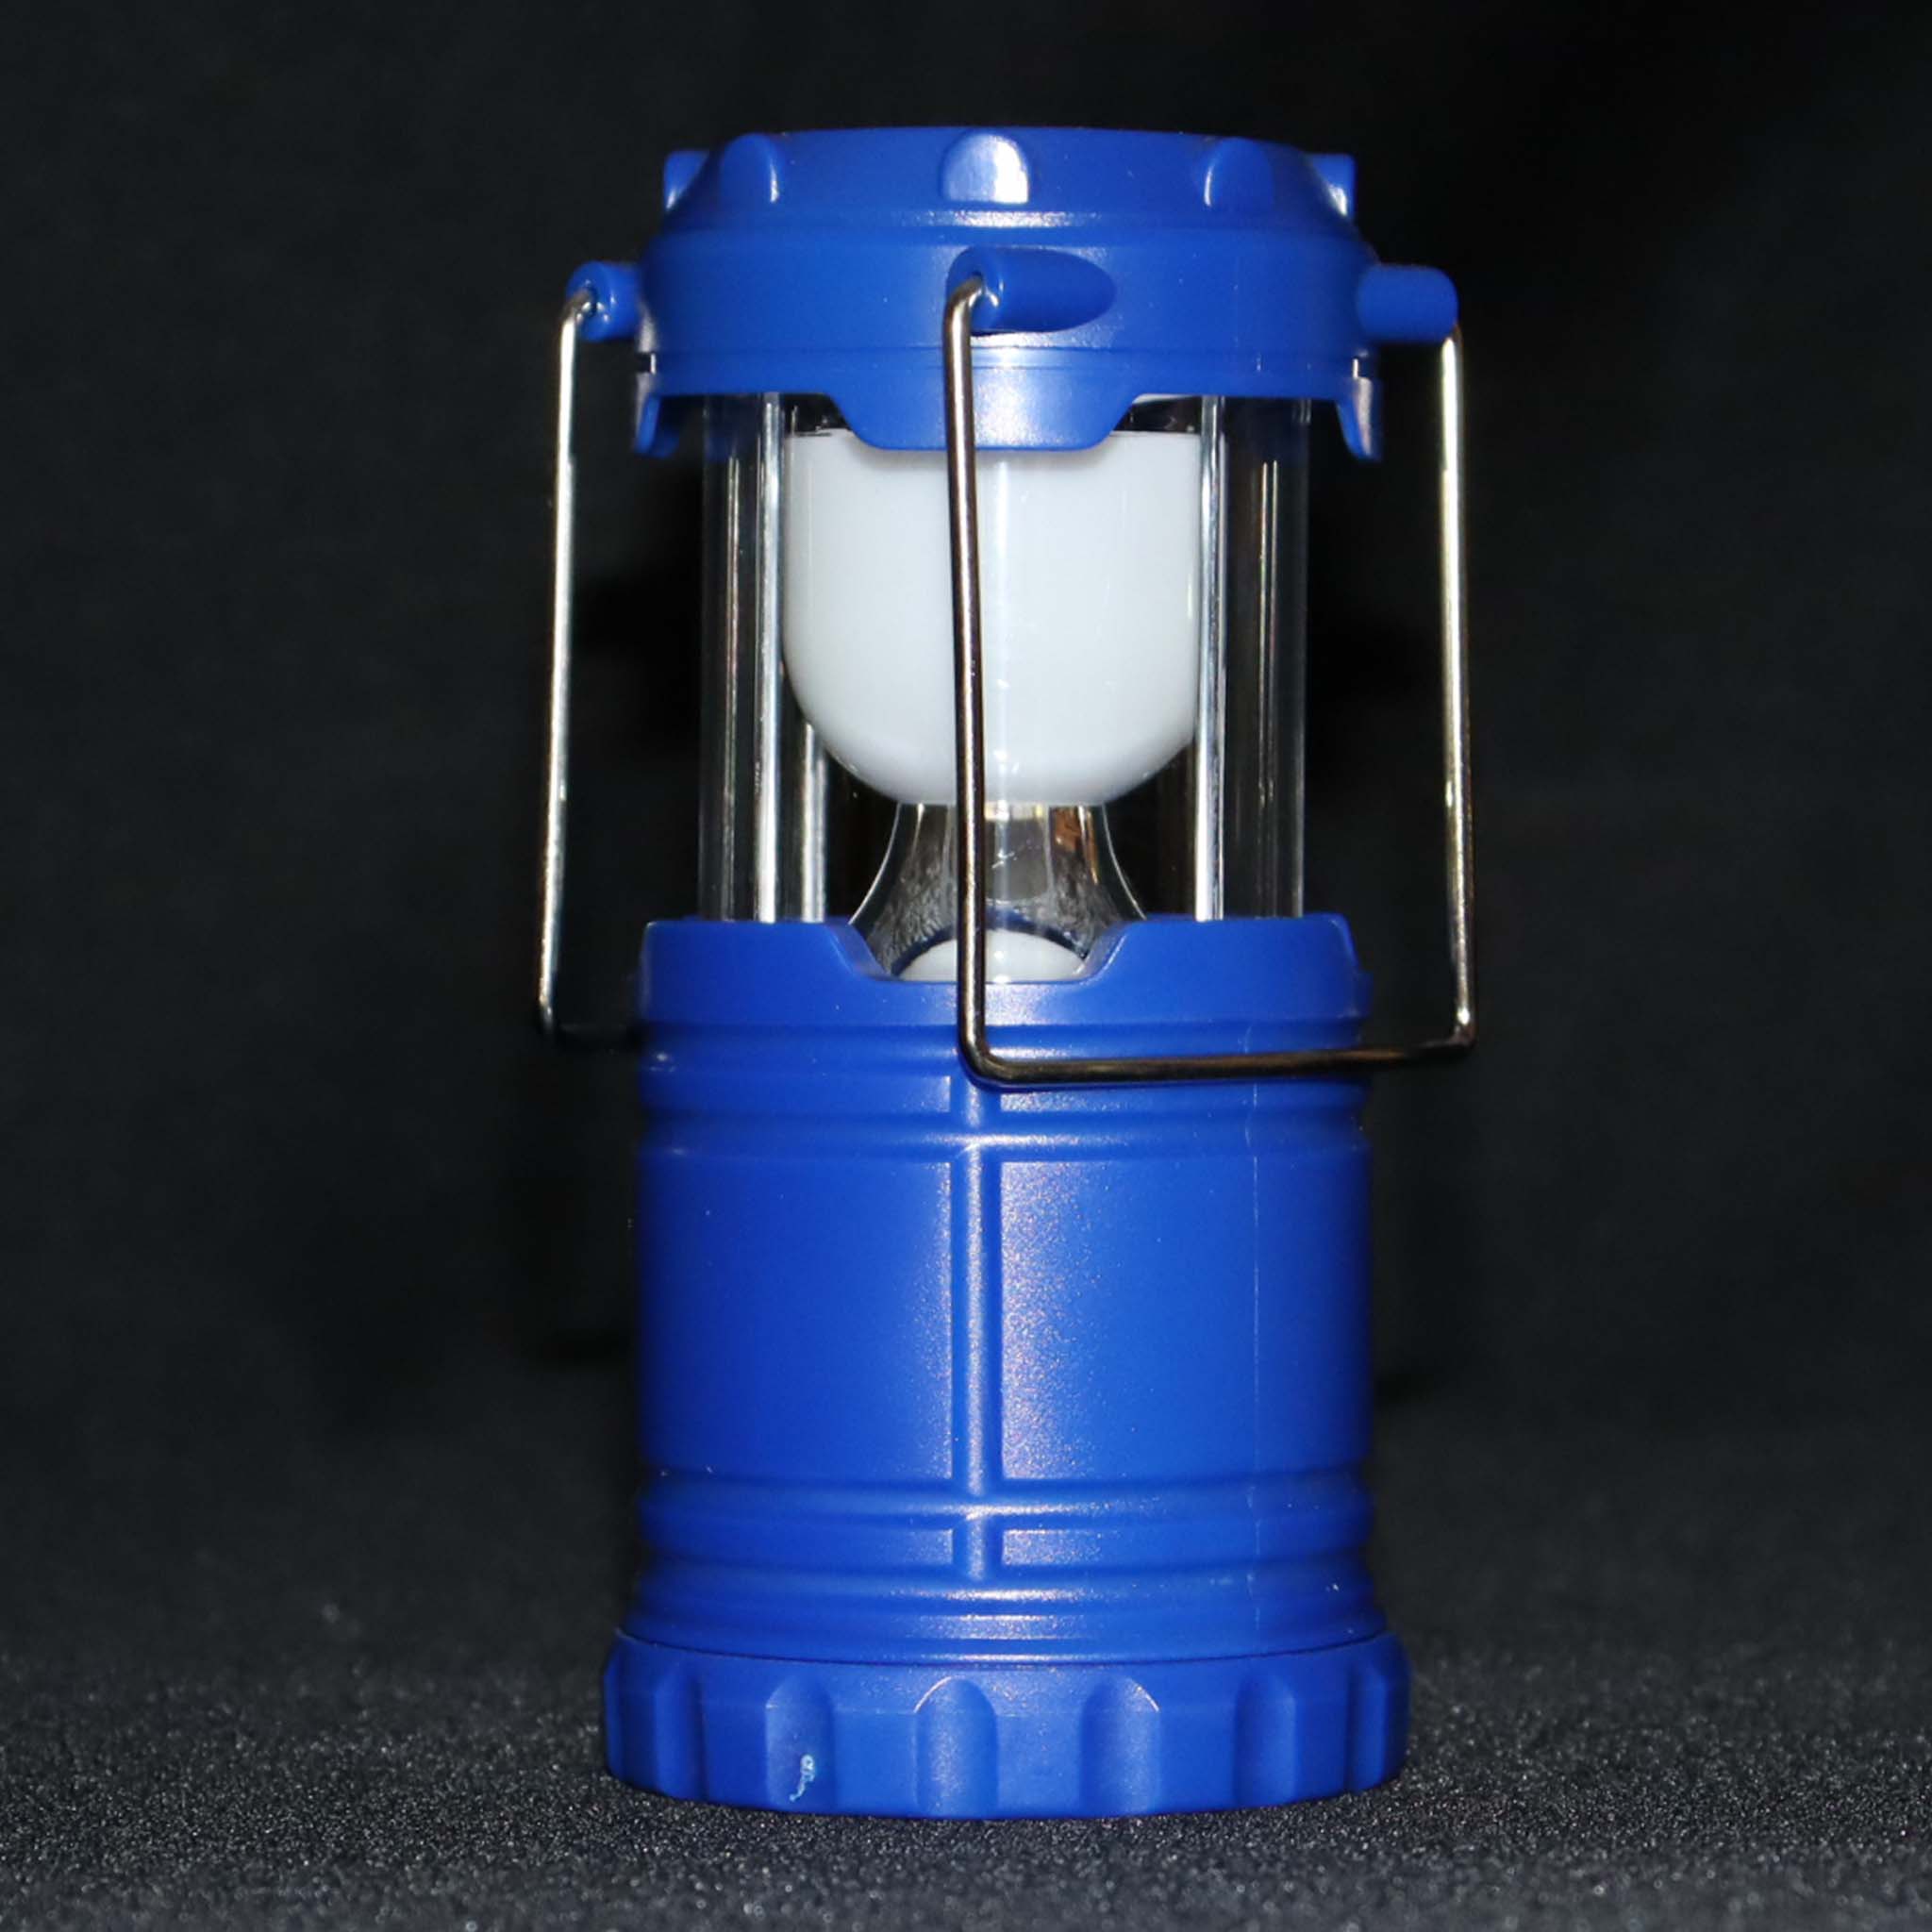 Blazing LEDz 12 LED Battery Operated Camping Lantern (2-Pack) 702403 - The  Home Depot